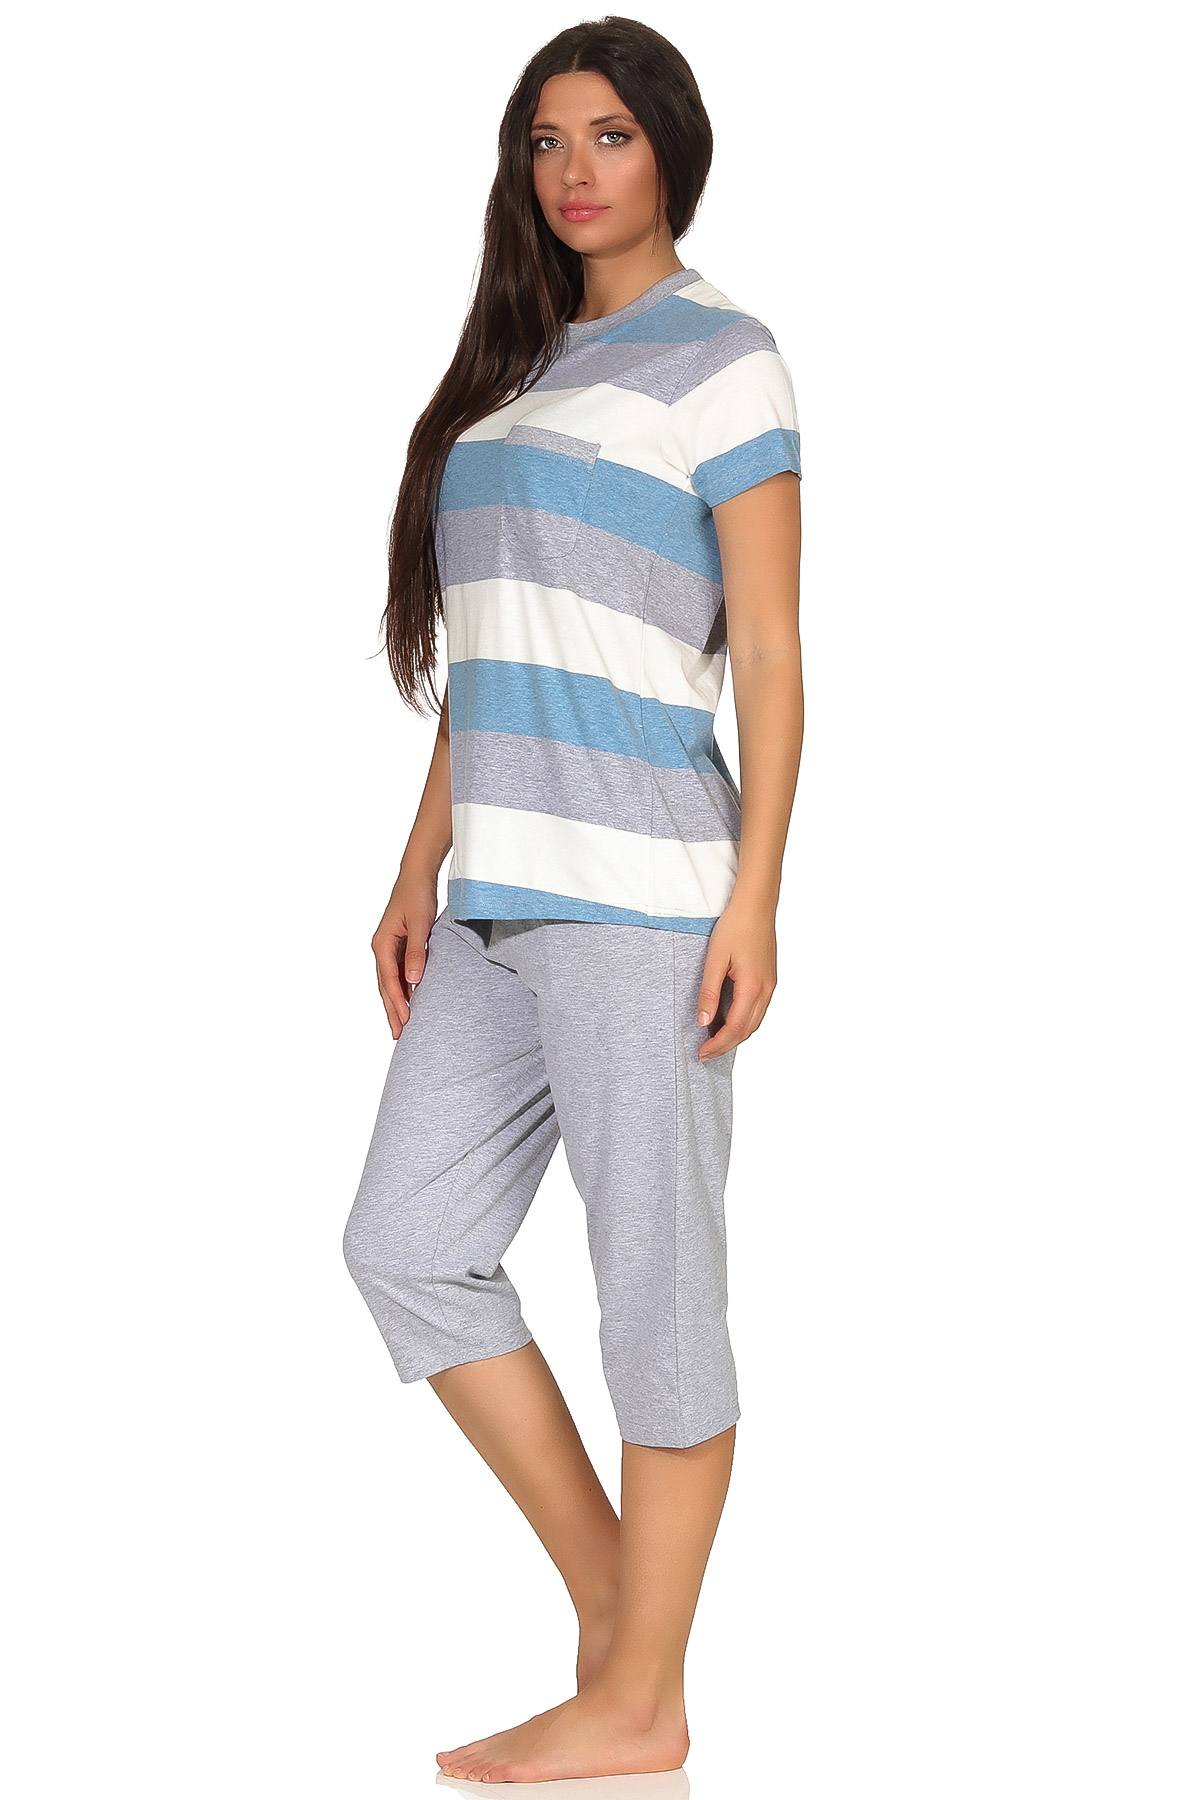 Damen Capri Pyjama kurzarm in wunderschöner Block Streifen Optik - auch in Übergrössen – 102 204 90 101